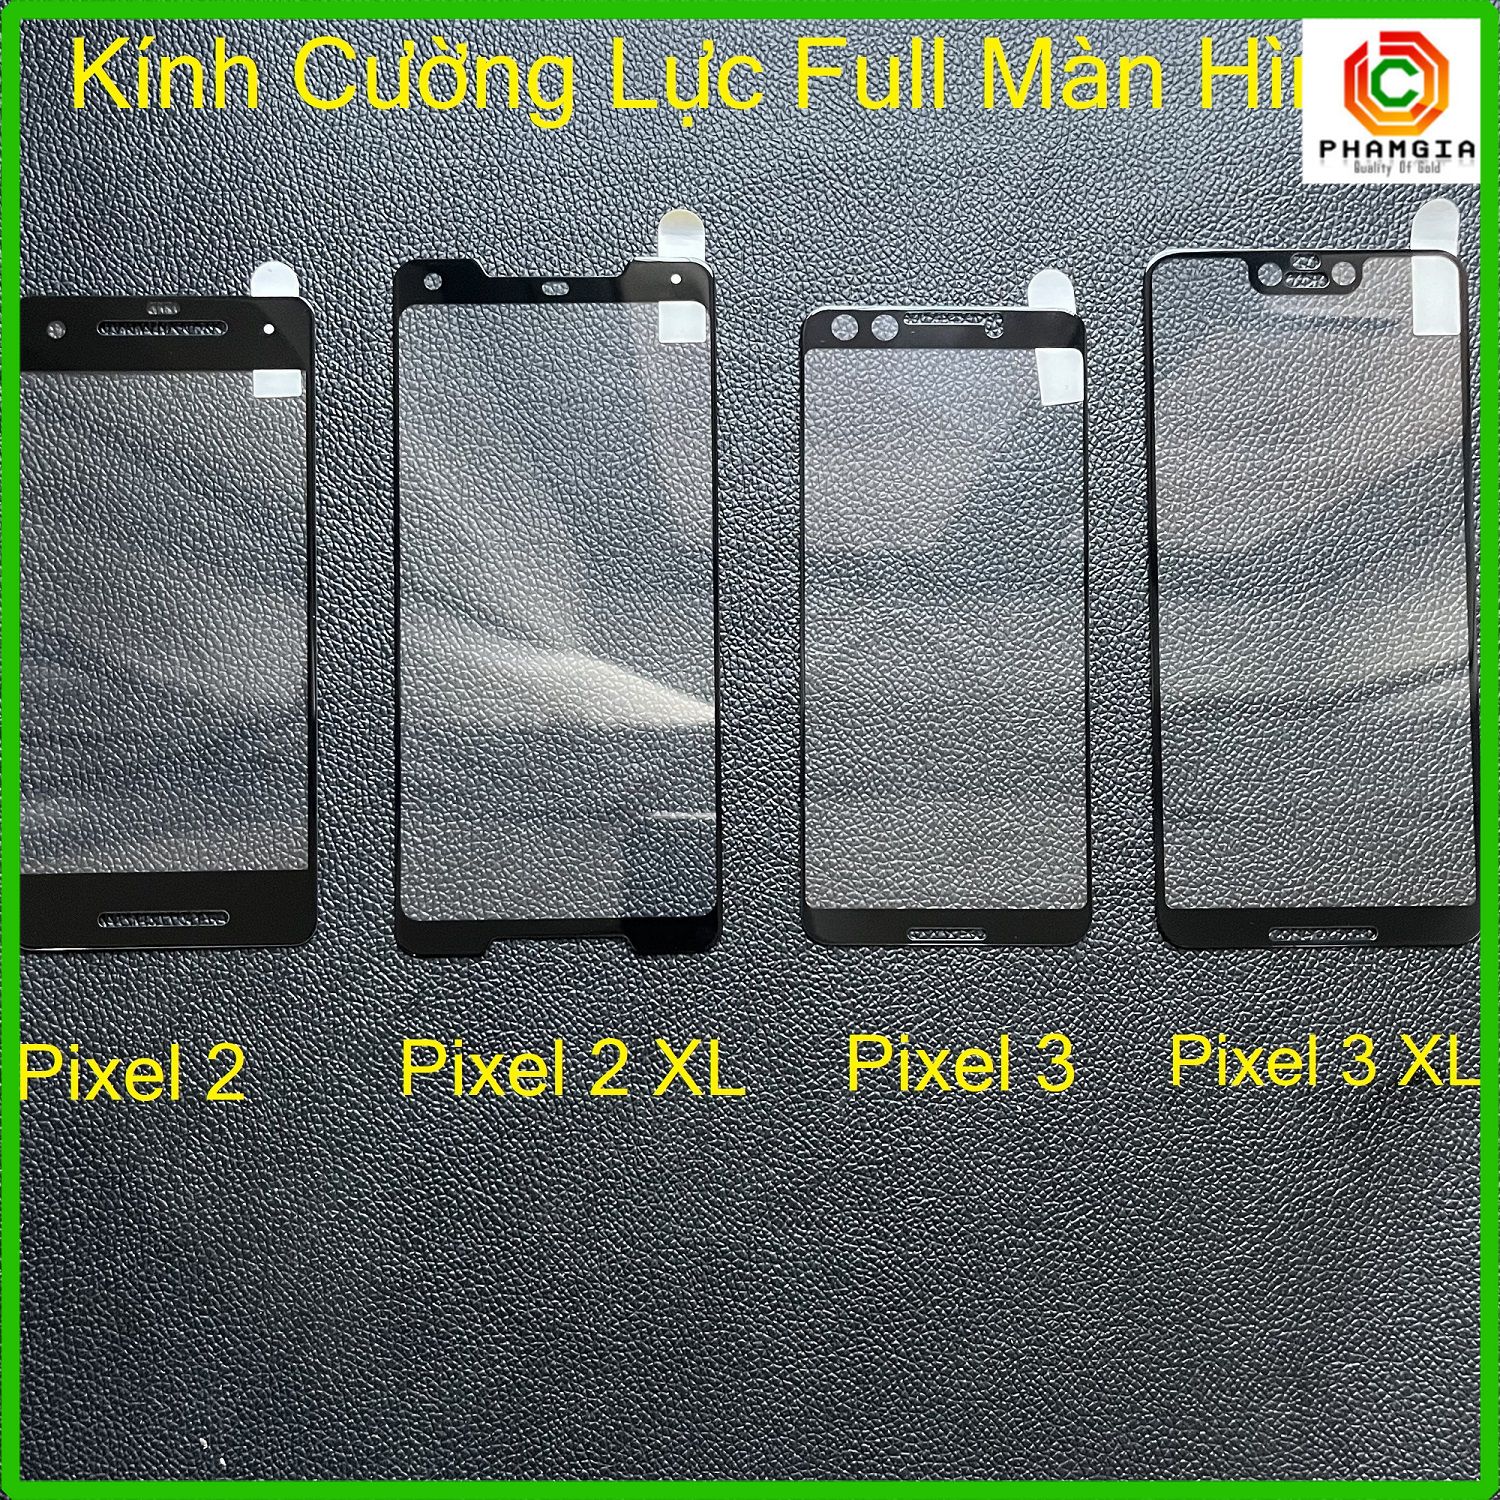 Kính cường lực Google Pixel 2 Pixel 2 XL Pixel 3 Pixel 3 XL full màn